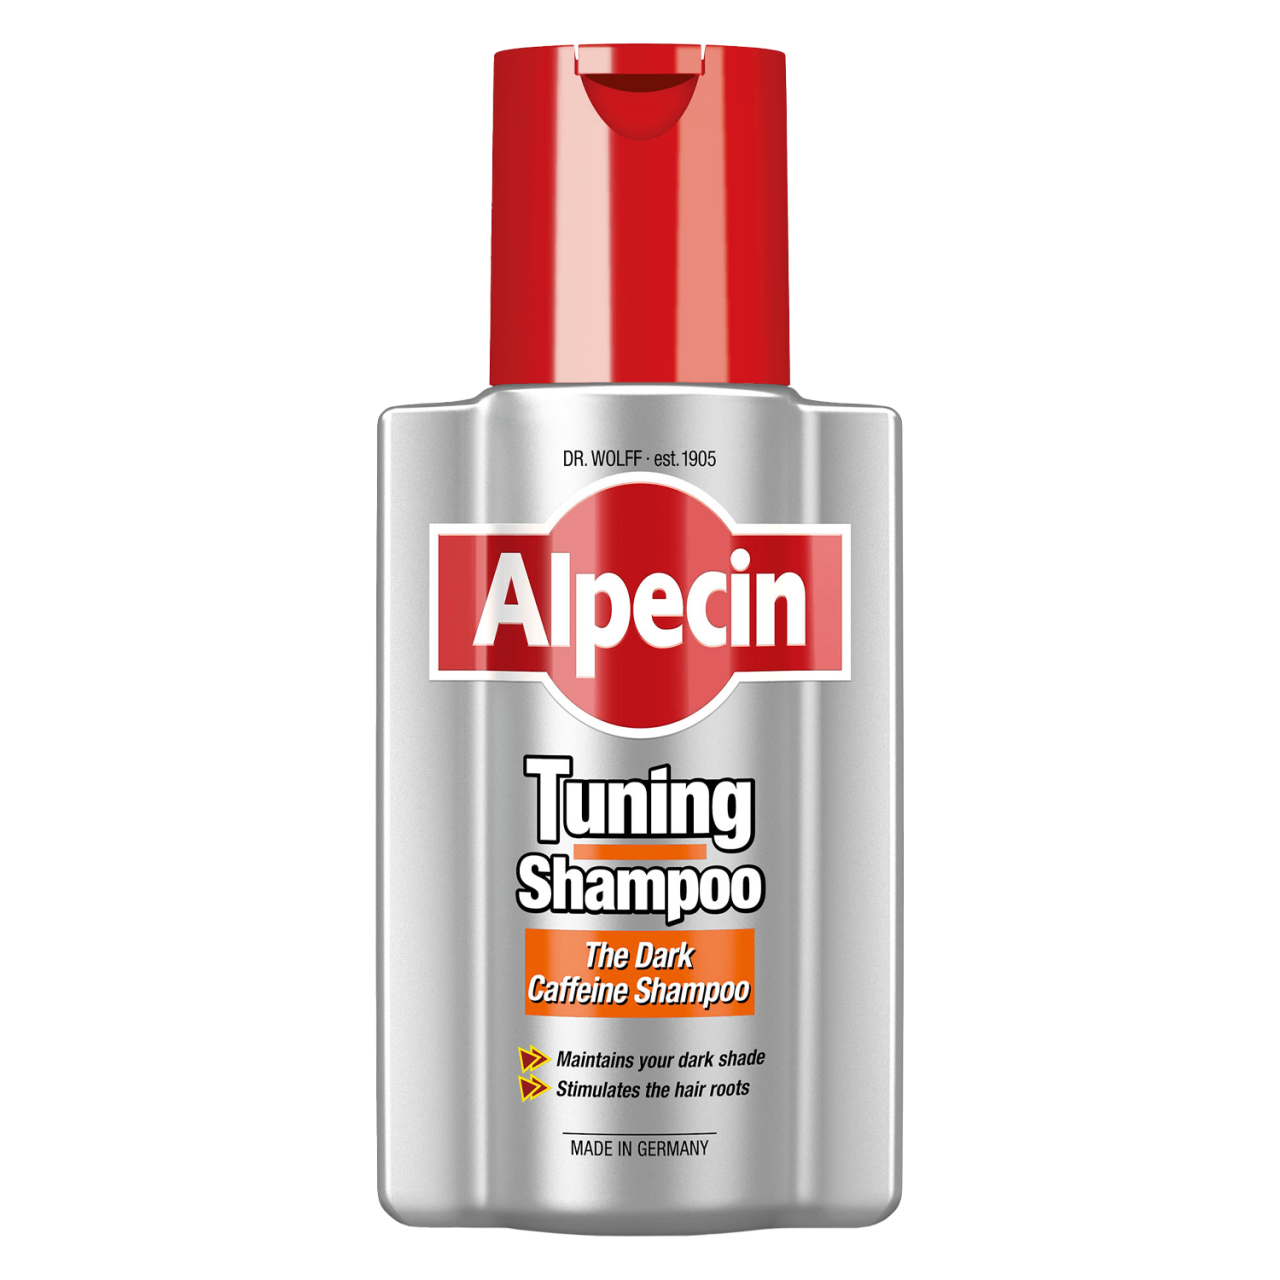 Alpecin - Tuning-Shampoo von Alpecin